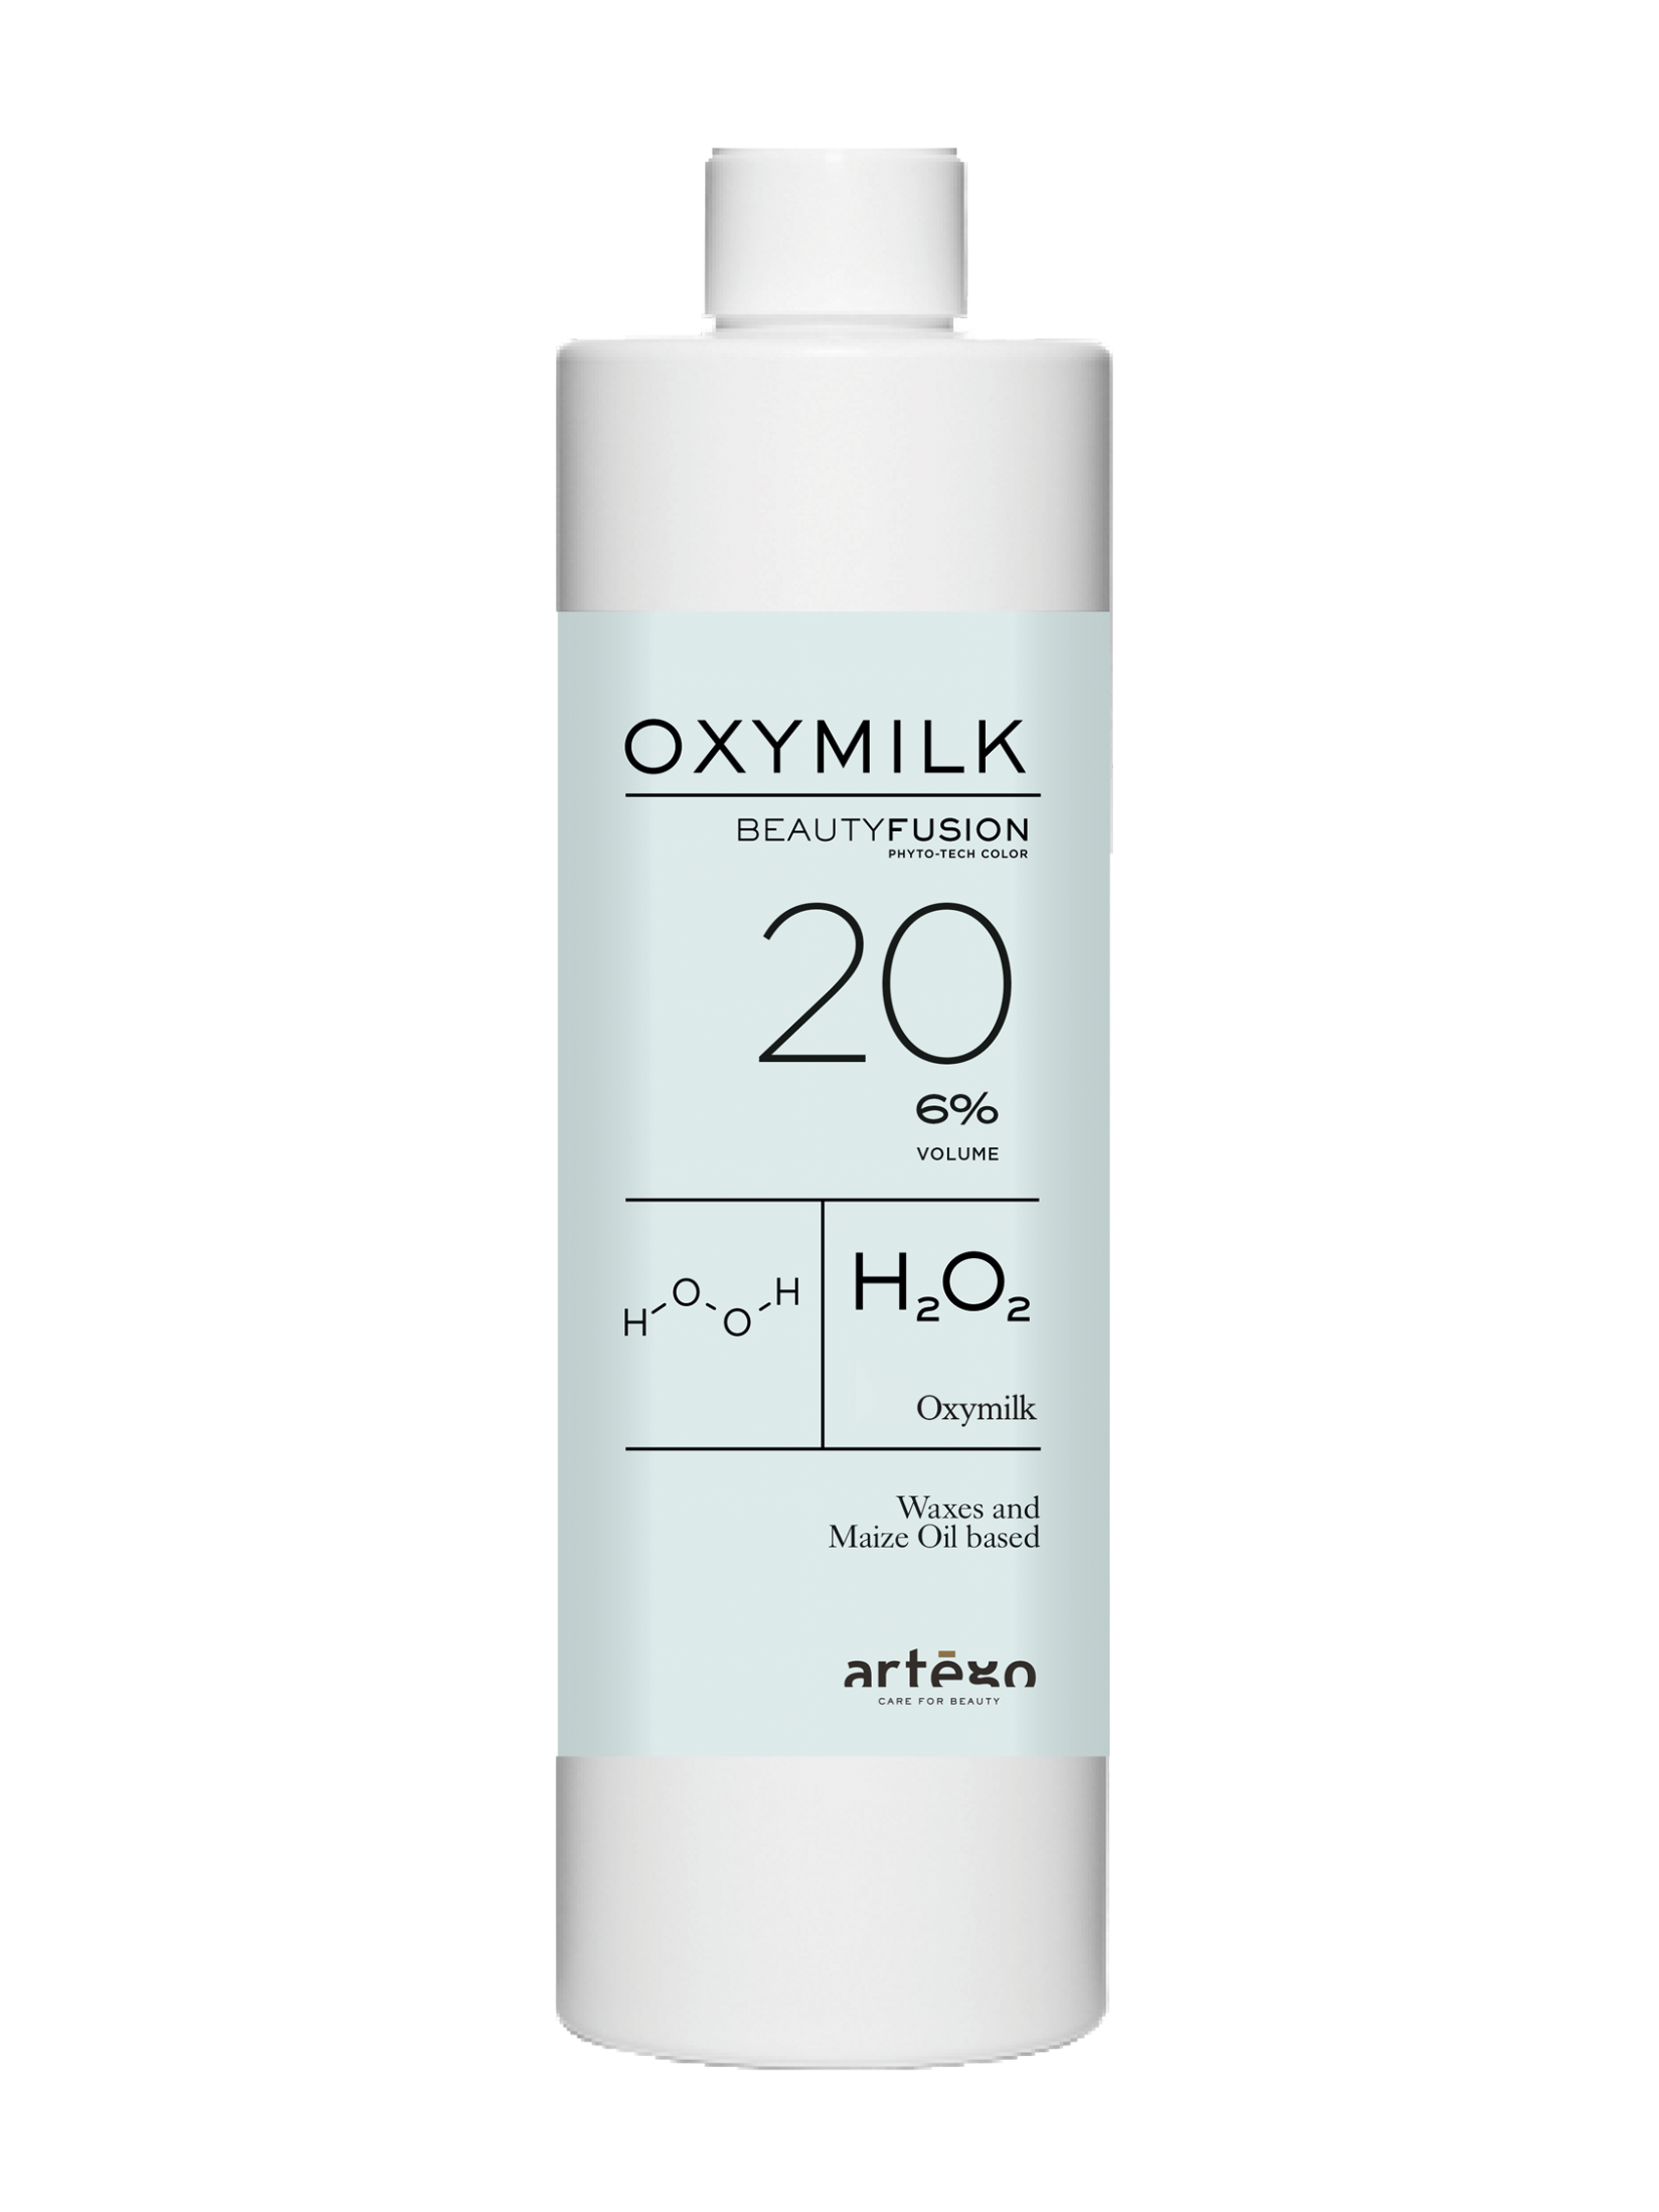 Oxymilk-20-vol-6-Beauty-Fusion